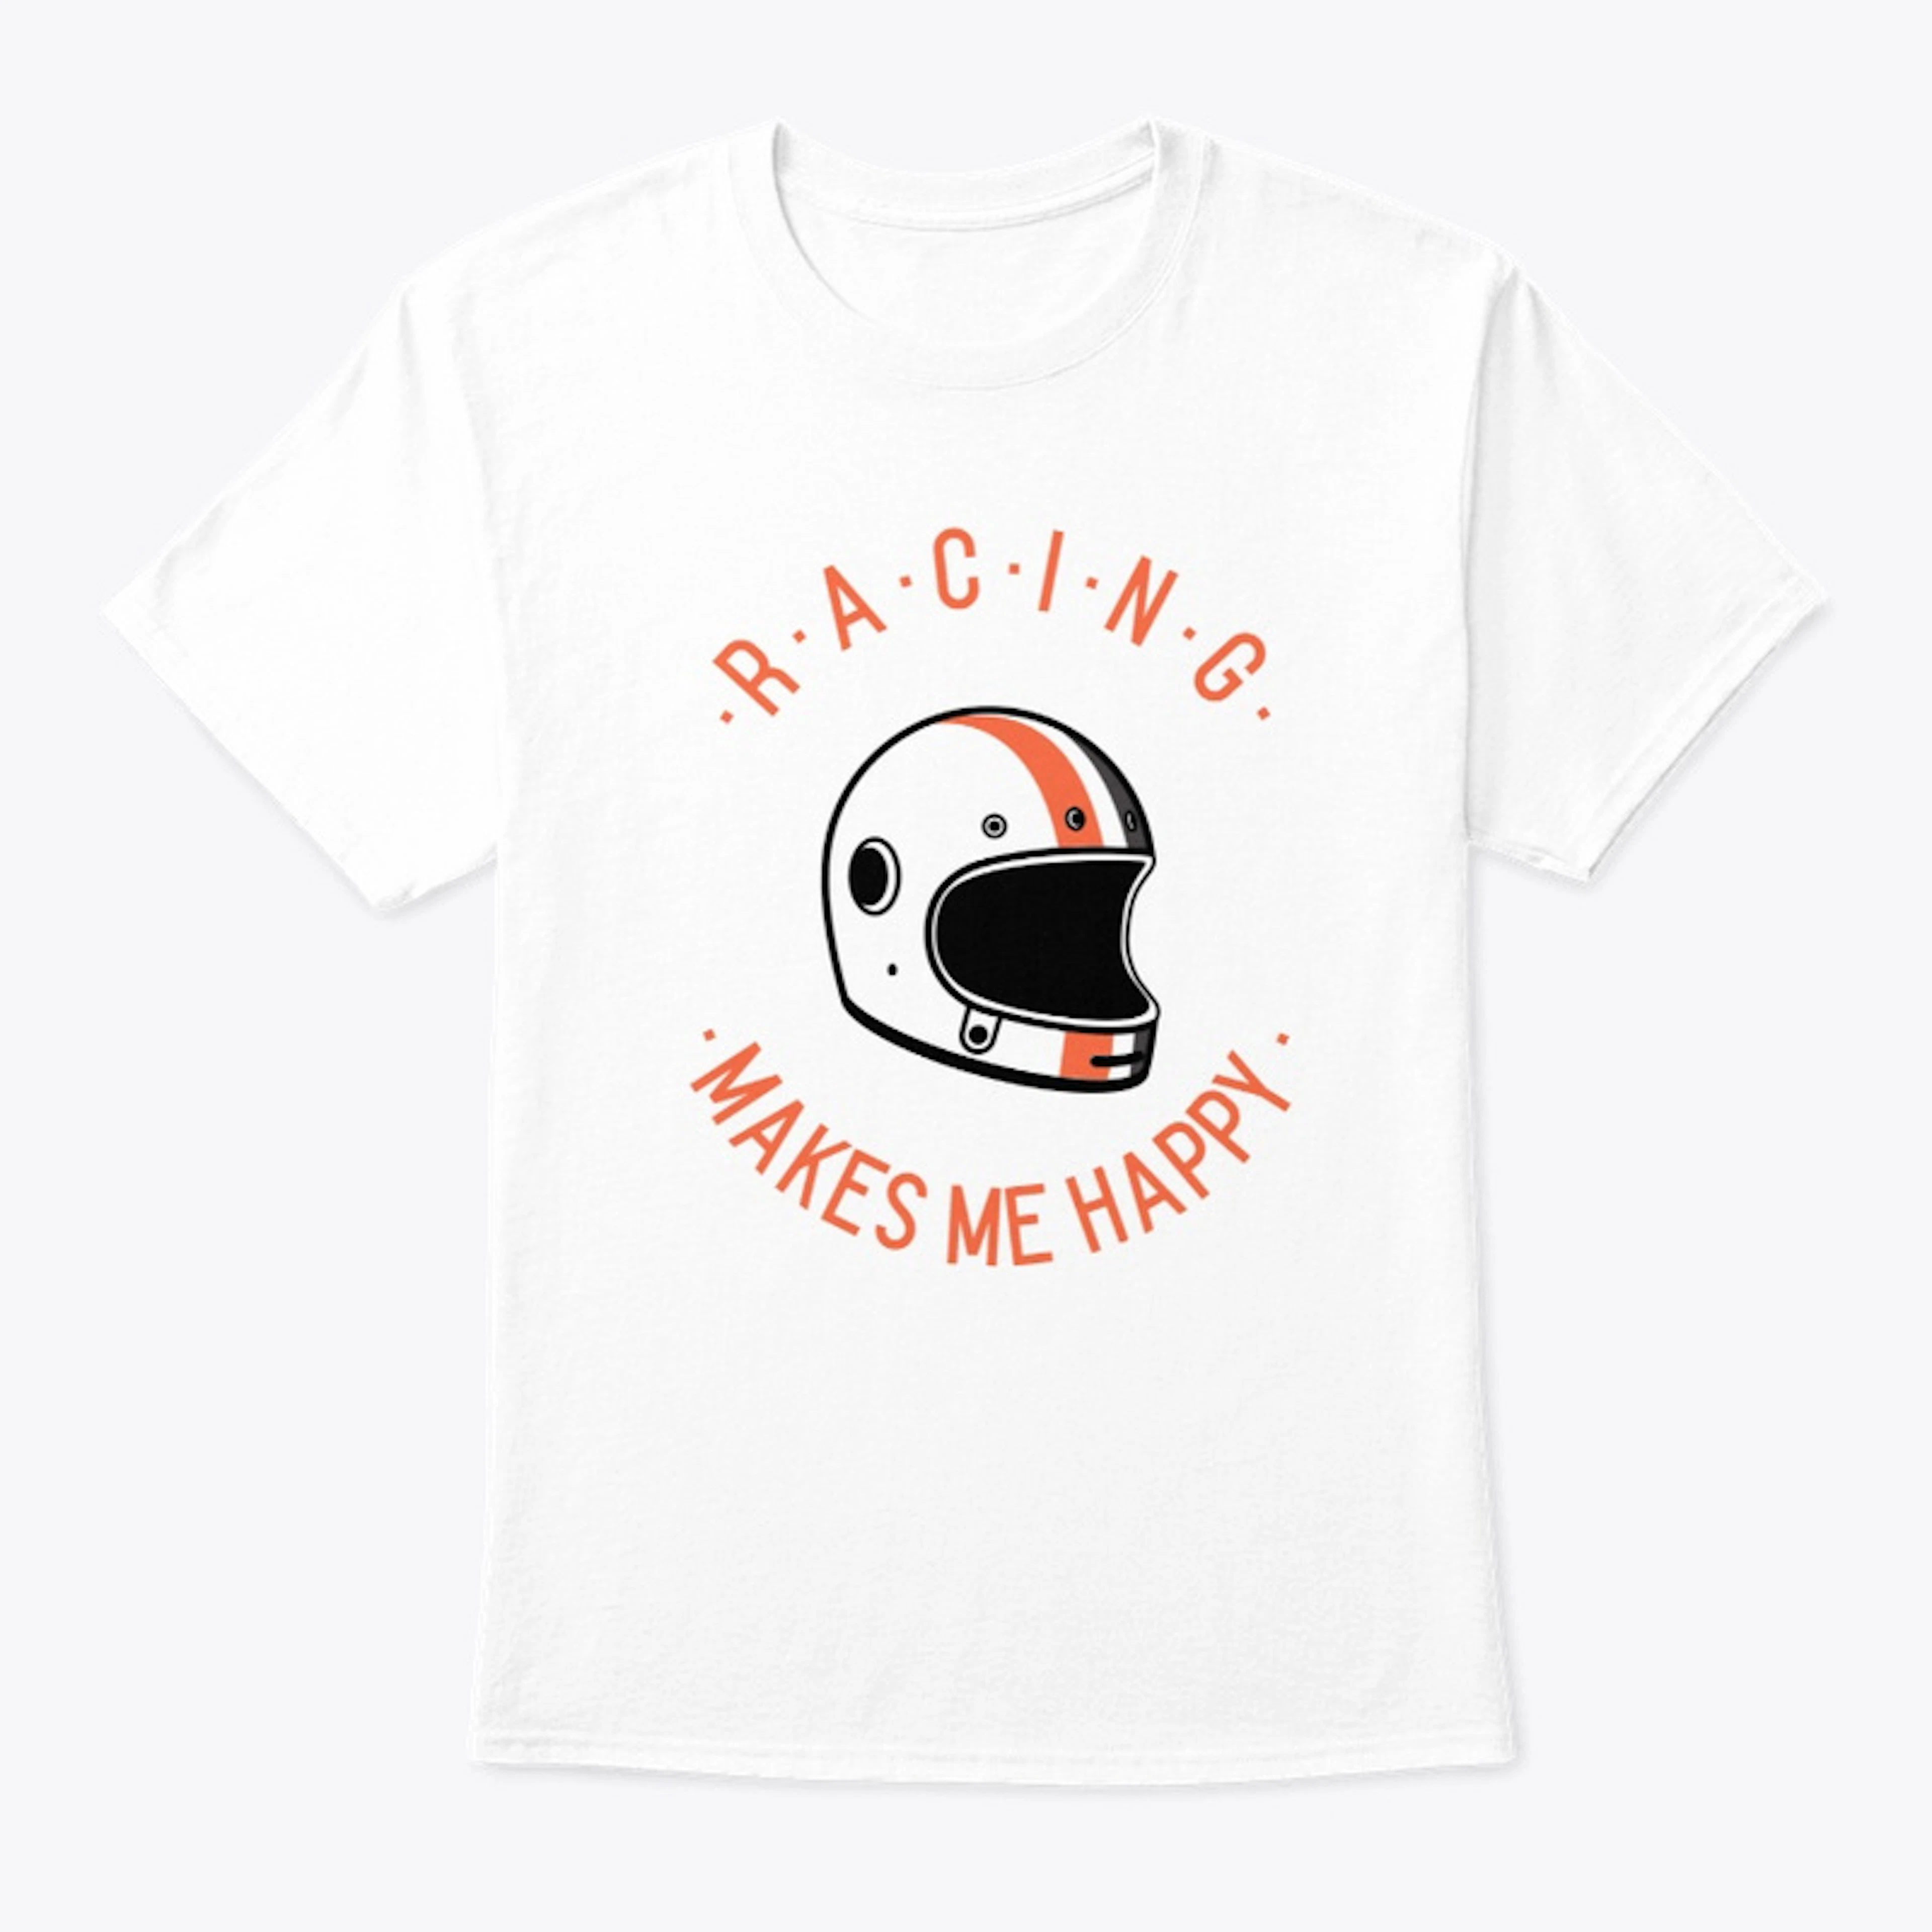 Racing makes me happy-Car design